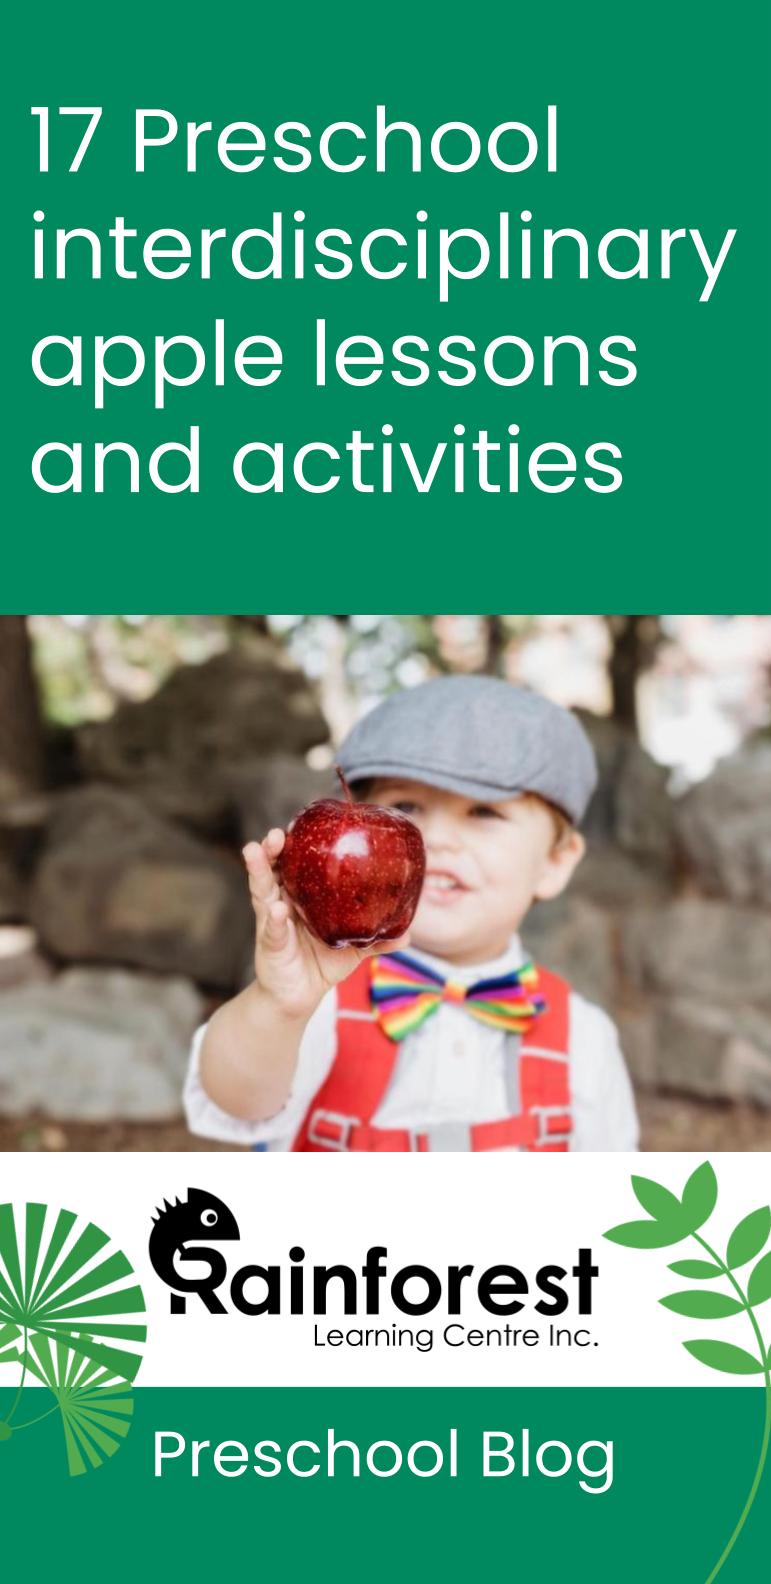 17 Preschool interdisciplinary apple lessons and activities - blog pinterest image